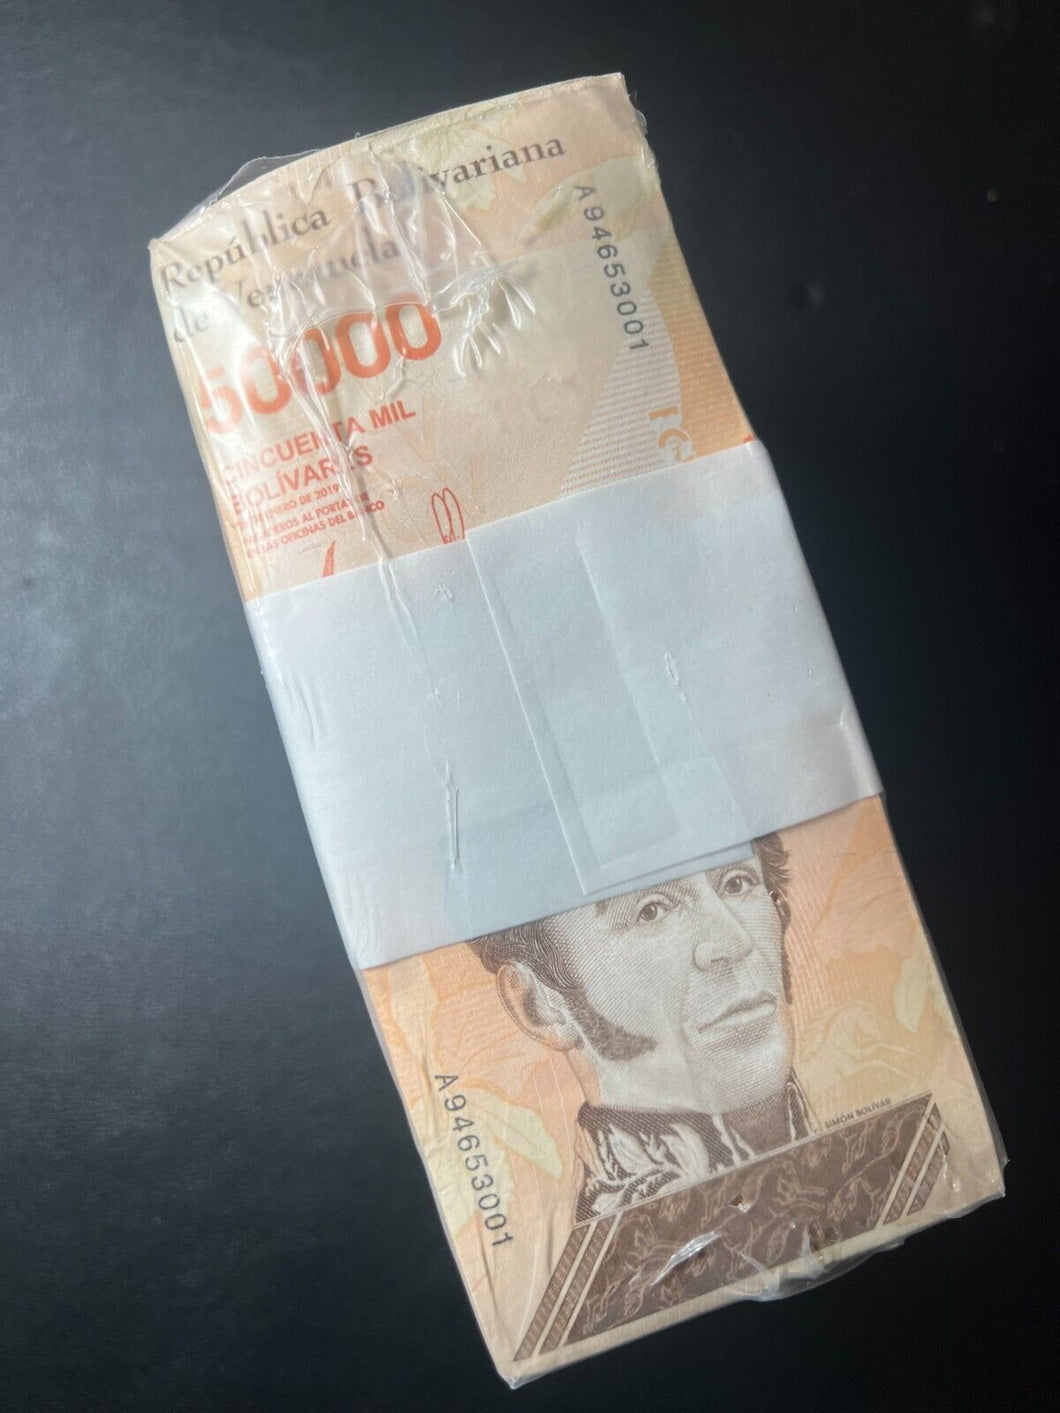 Venezuela 50,000 (50000) Bolivar Soberano, 2019 UNC 1000 Note Brick